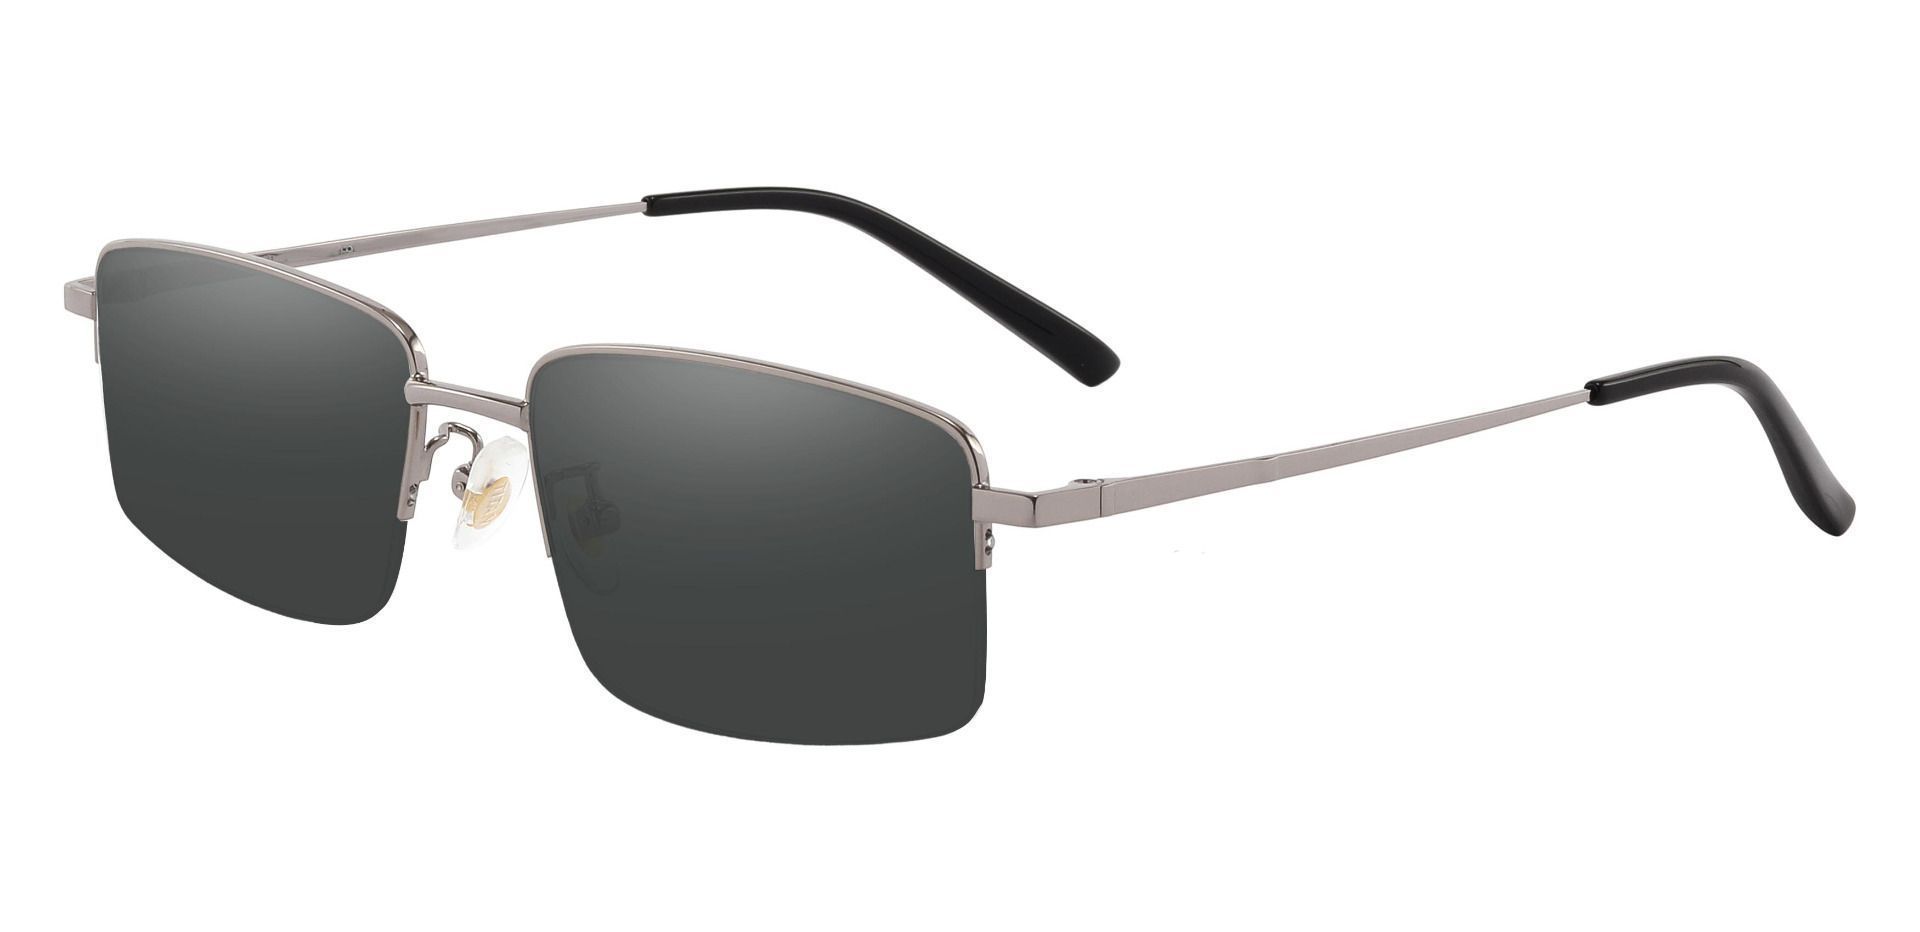 Wayne Rectangle Prescription Sunglasses - Gray Frame With Gray Lenses